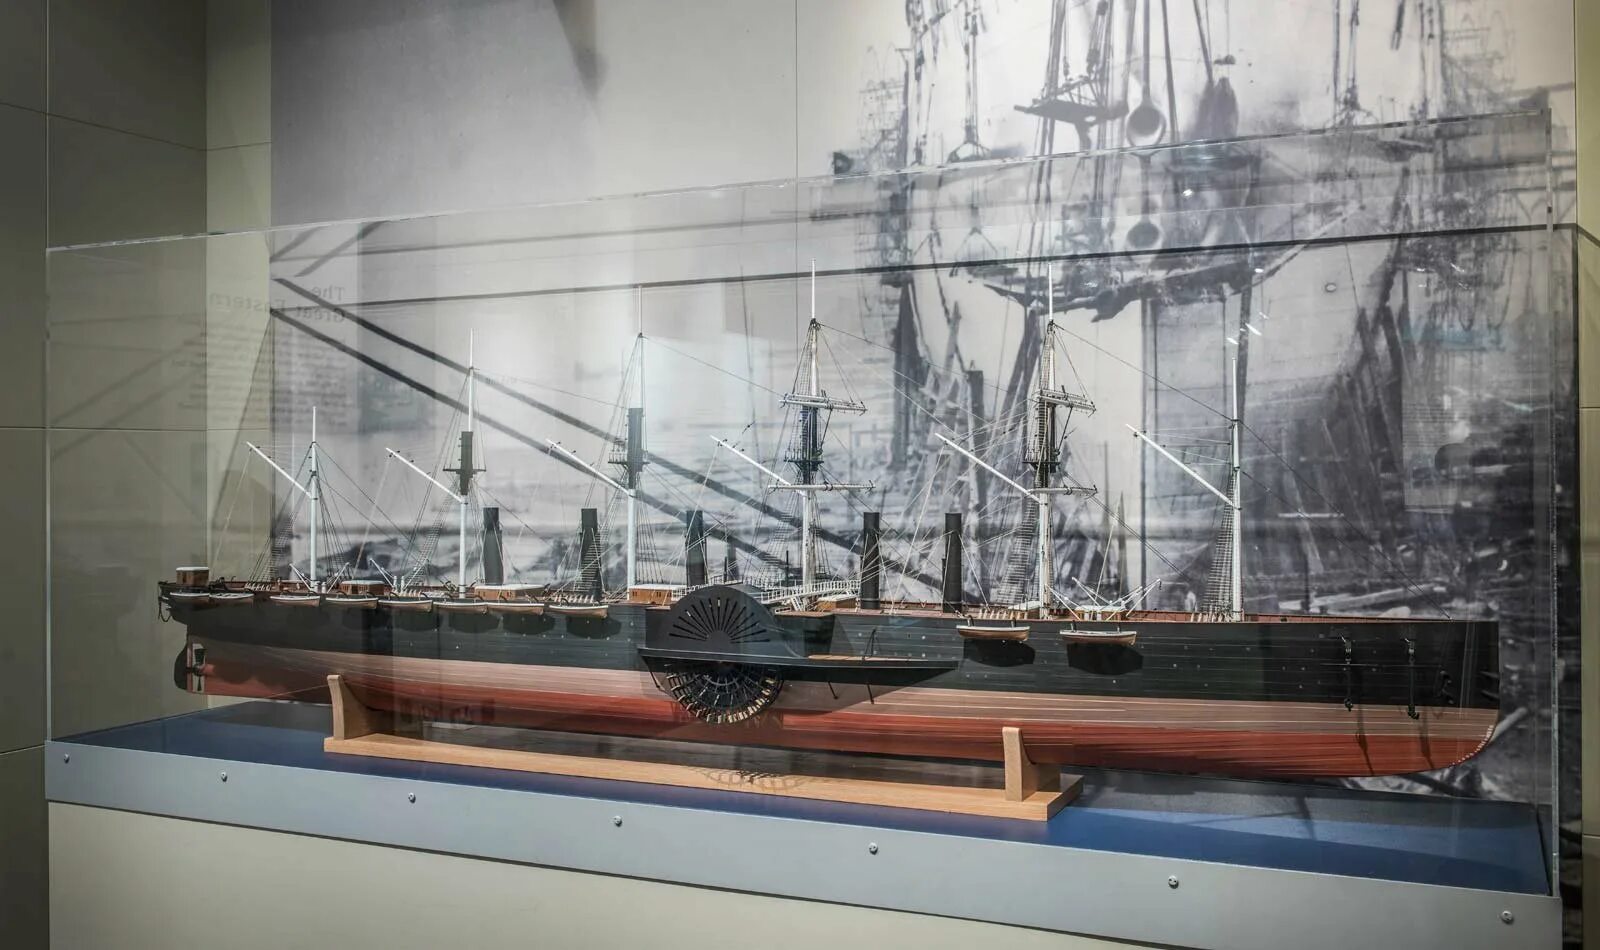 Судно Левиафан Грейт Истерн. Грейт Истерн пароход. Great Eastern корабль. SS great Eastern, 1860. Грейт истерн